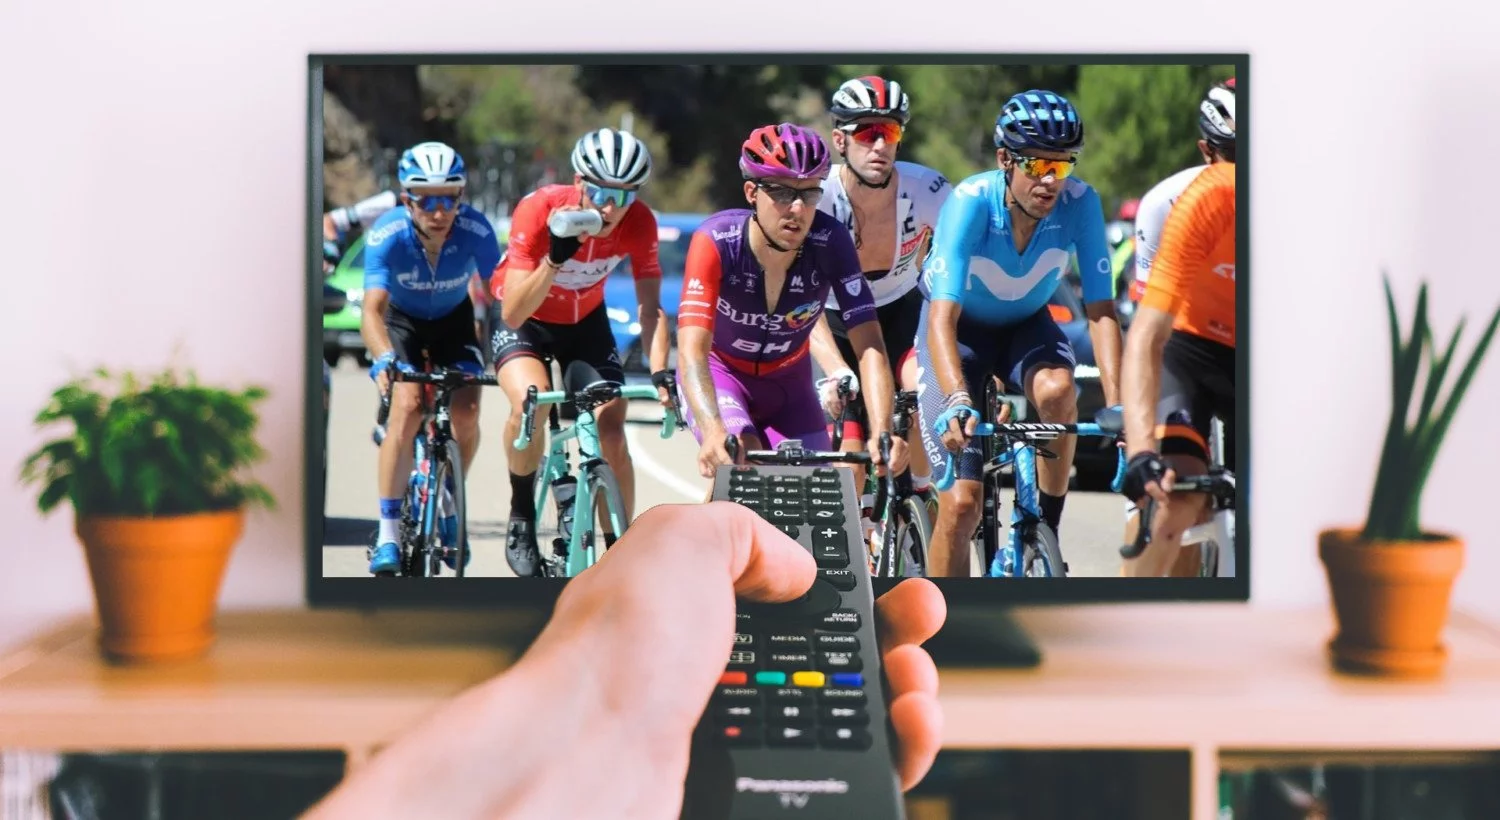 Cykling på tv og streaming